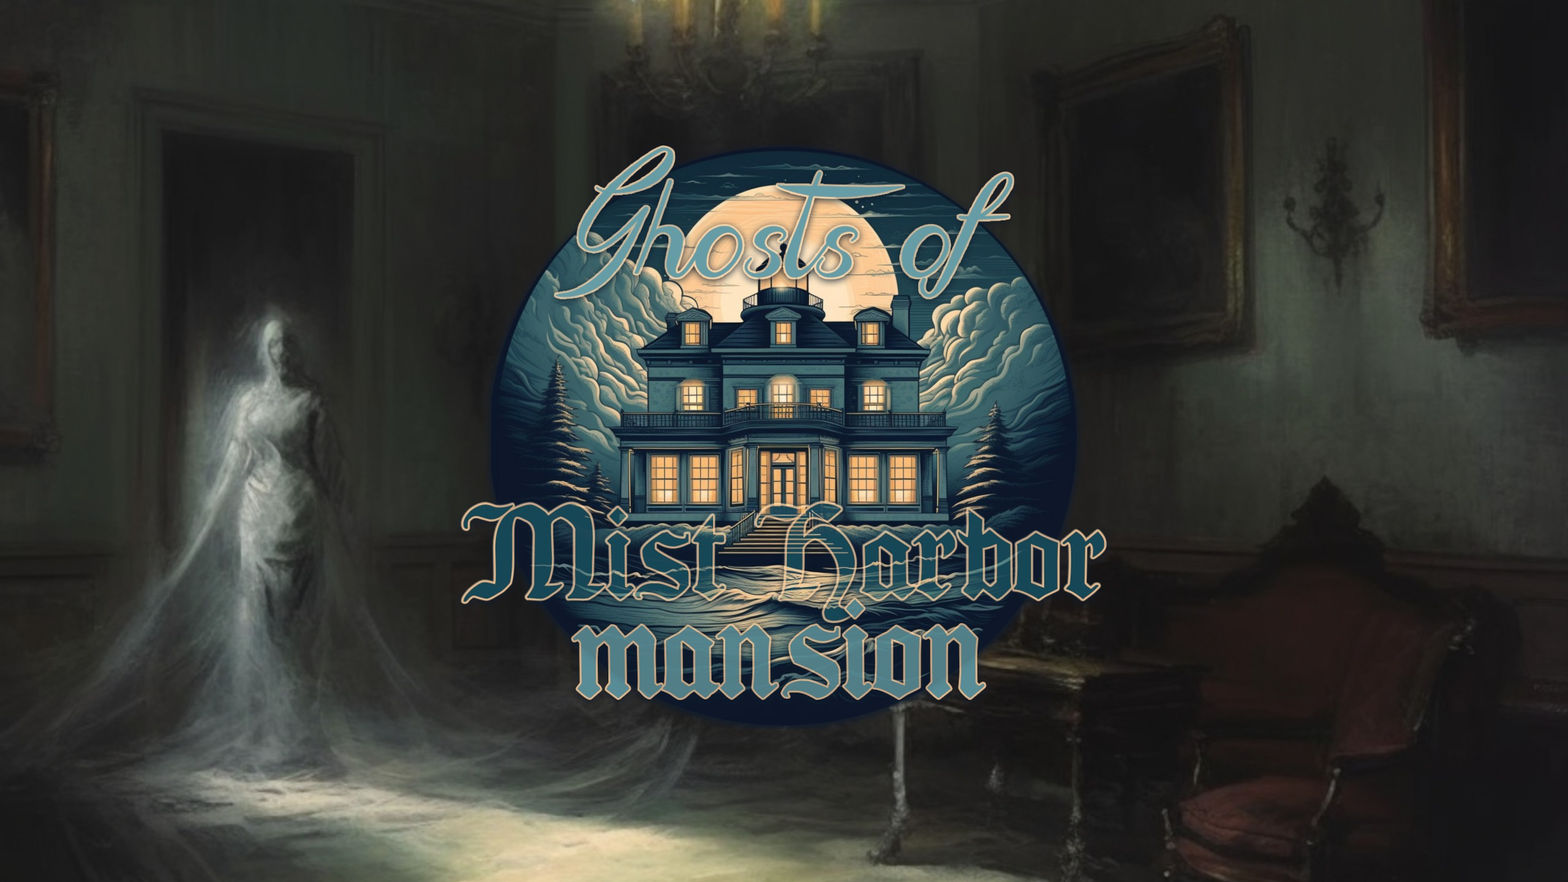 Ghosts of Mist Harbor Mansion